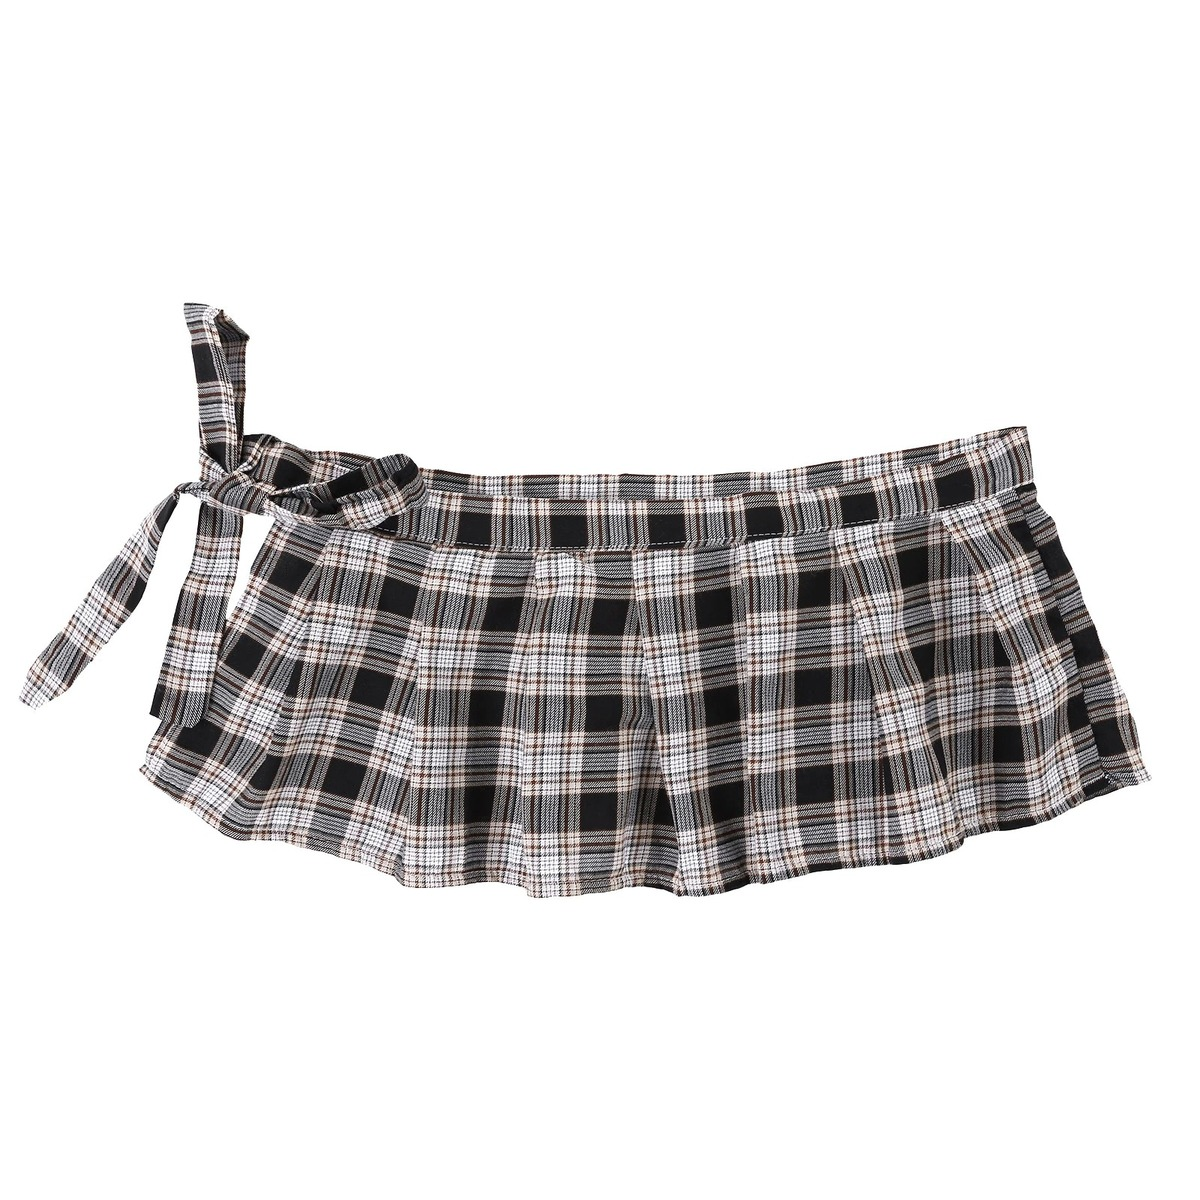 Women's Erotic Lace-up Skirt / Sexy Schoolgirl's Mini Skirt with Ruffle - EVE's SECRETS